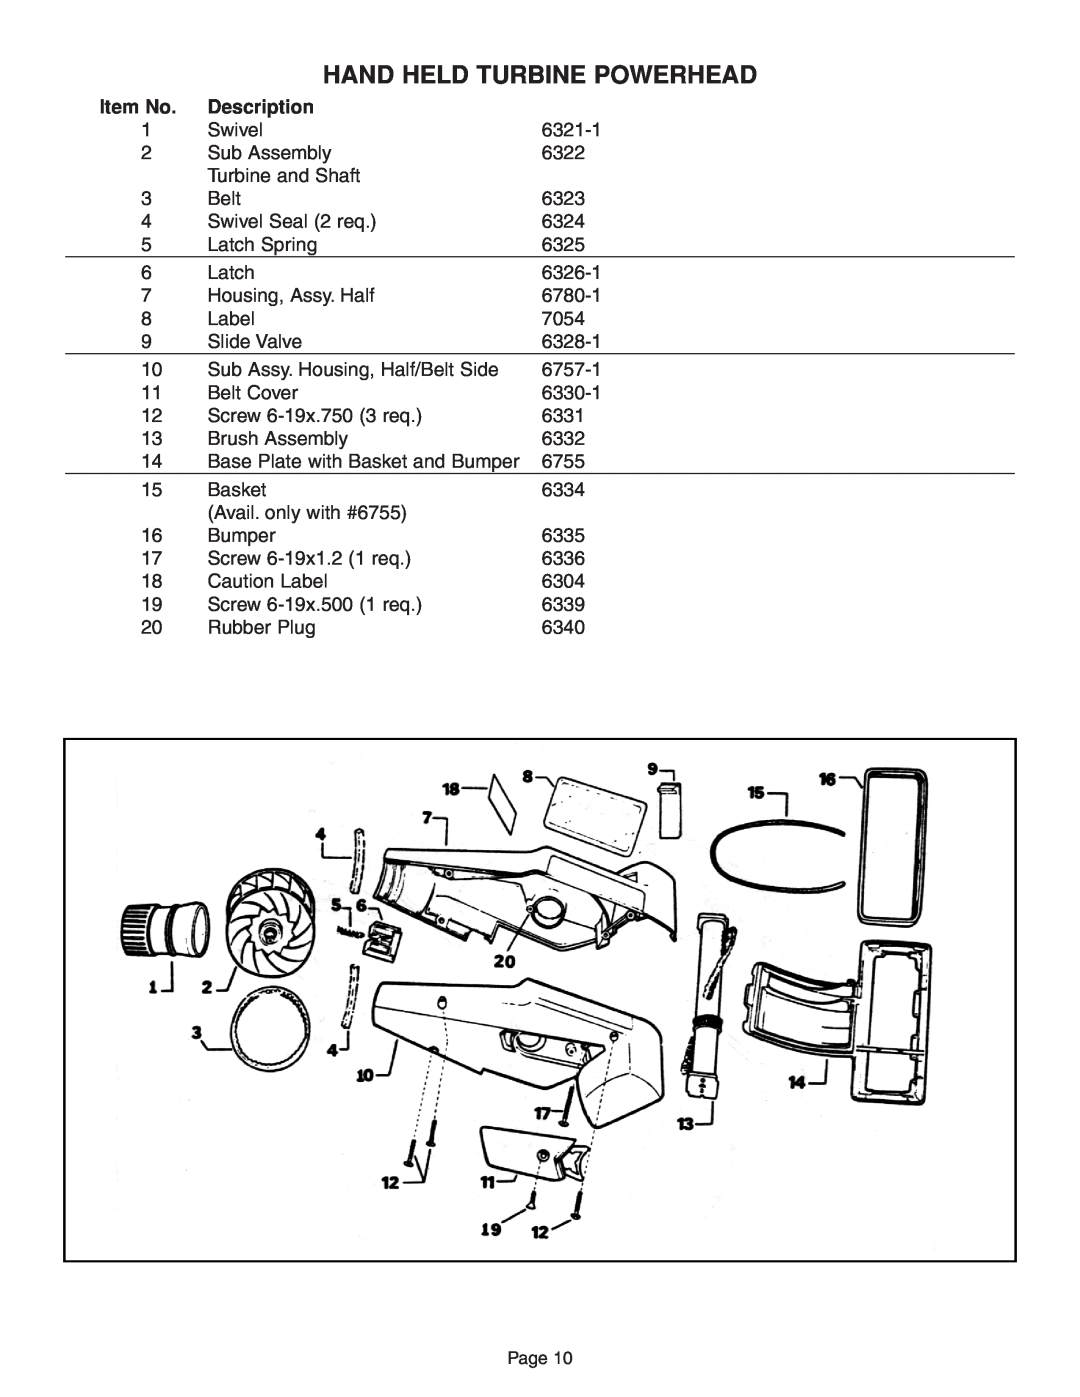 H-P Products T210, 7161 instruction manual Hand Held Turbine Powerhead, Item No, Description 